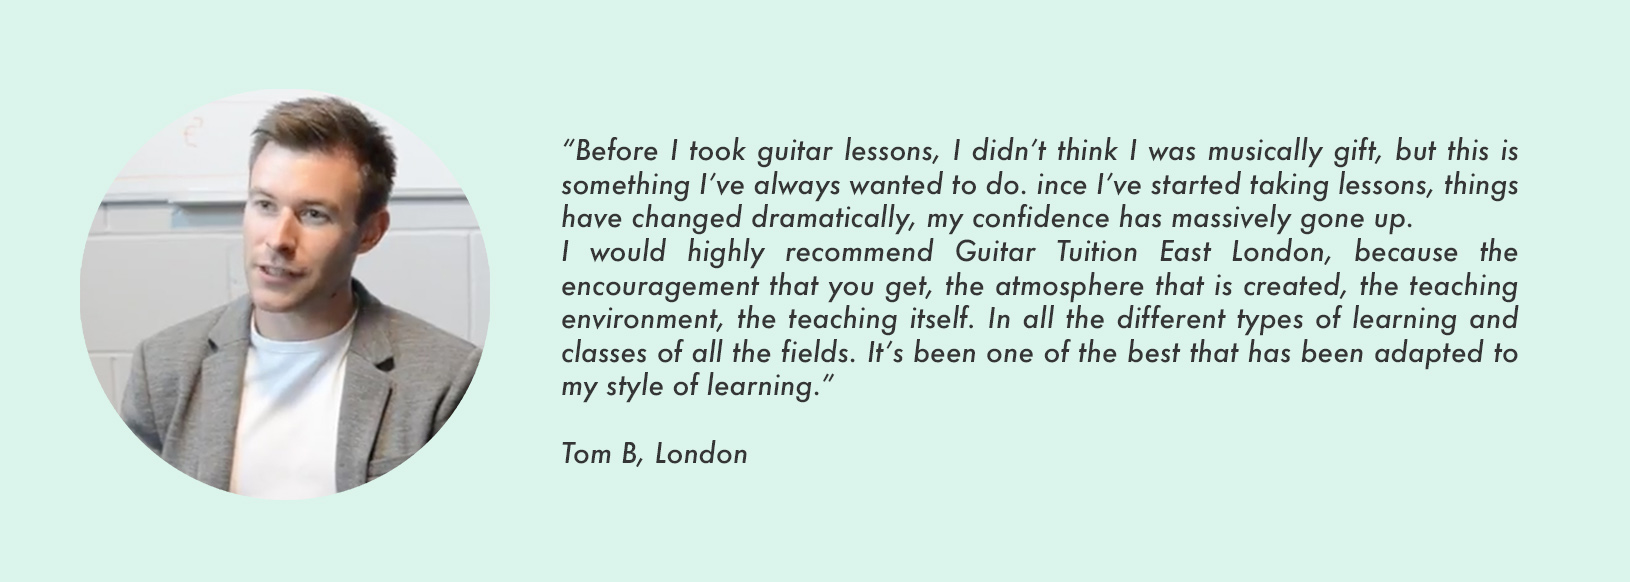 Tom testimonial.jpg